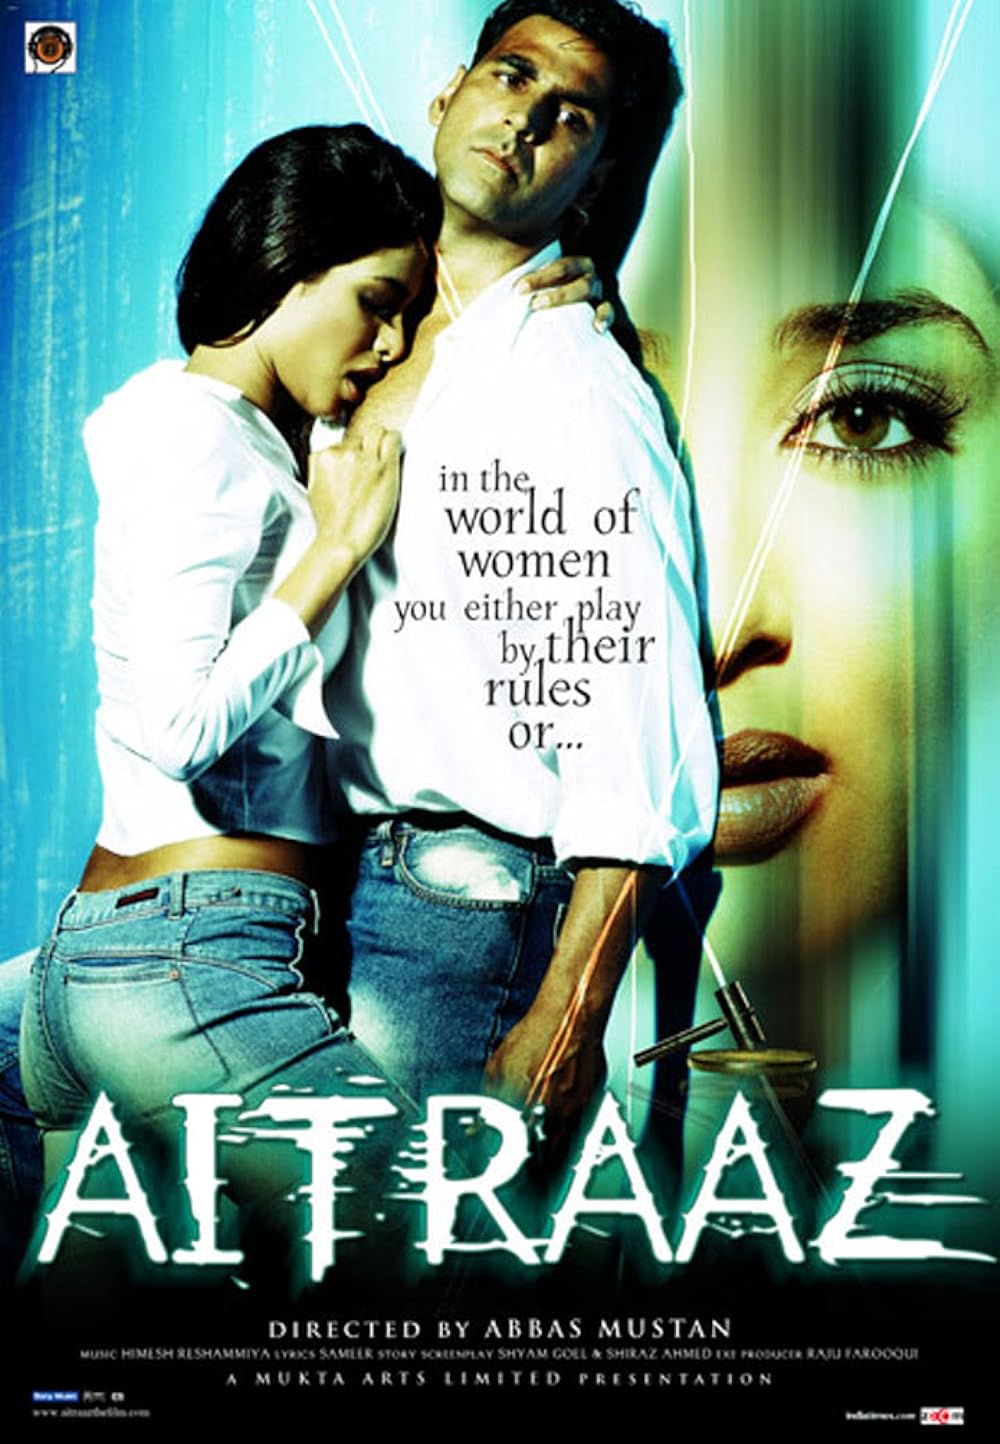 FULL MOVIE: Aitraaz (2004)